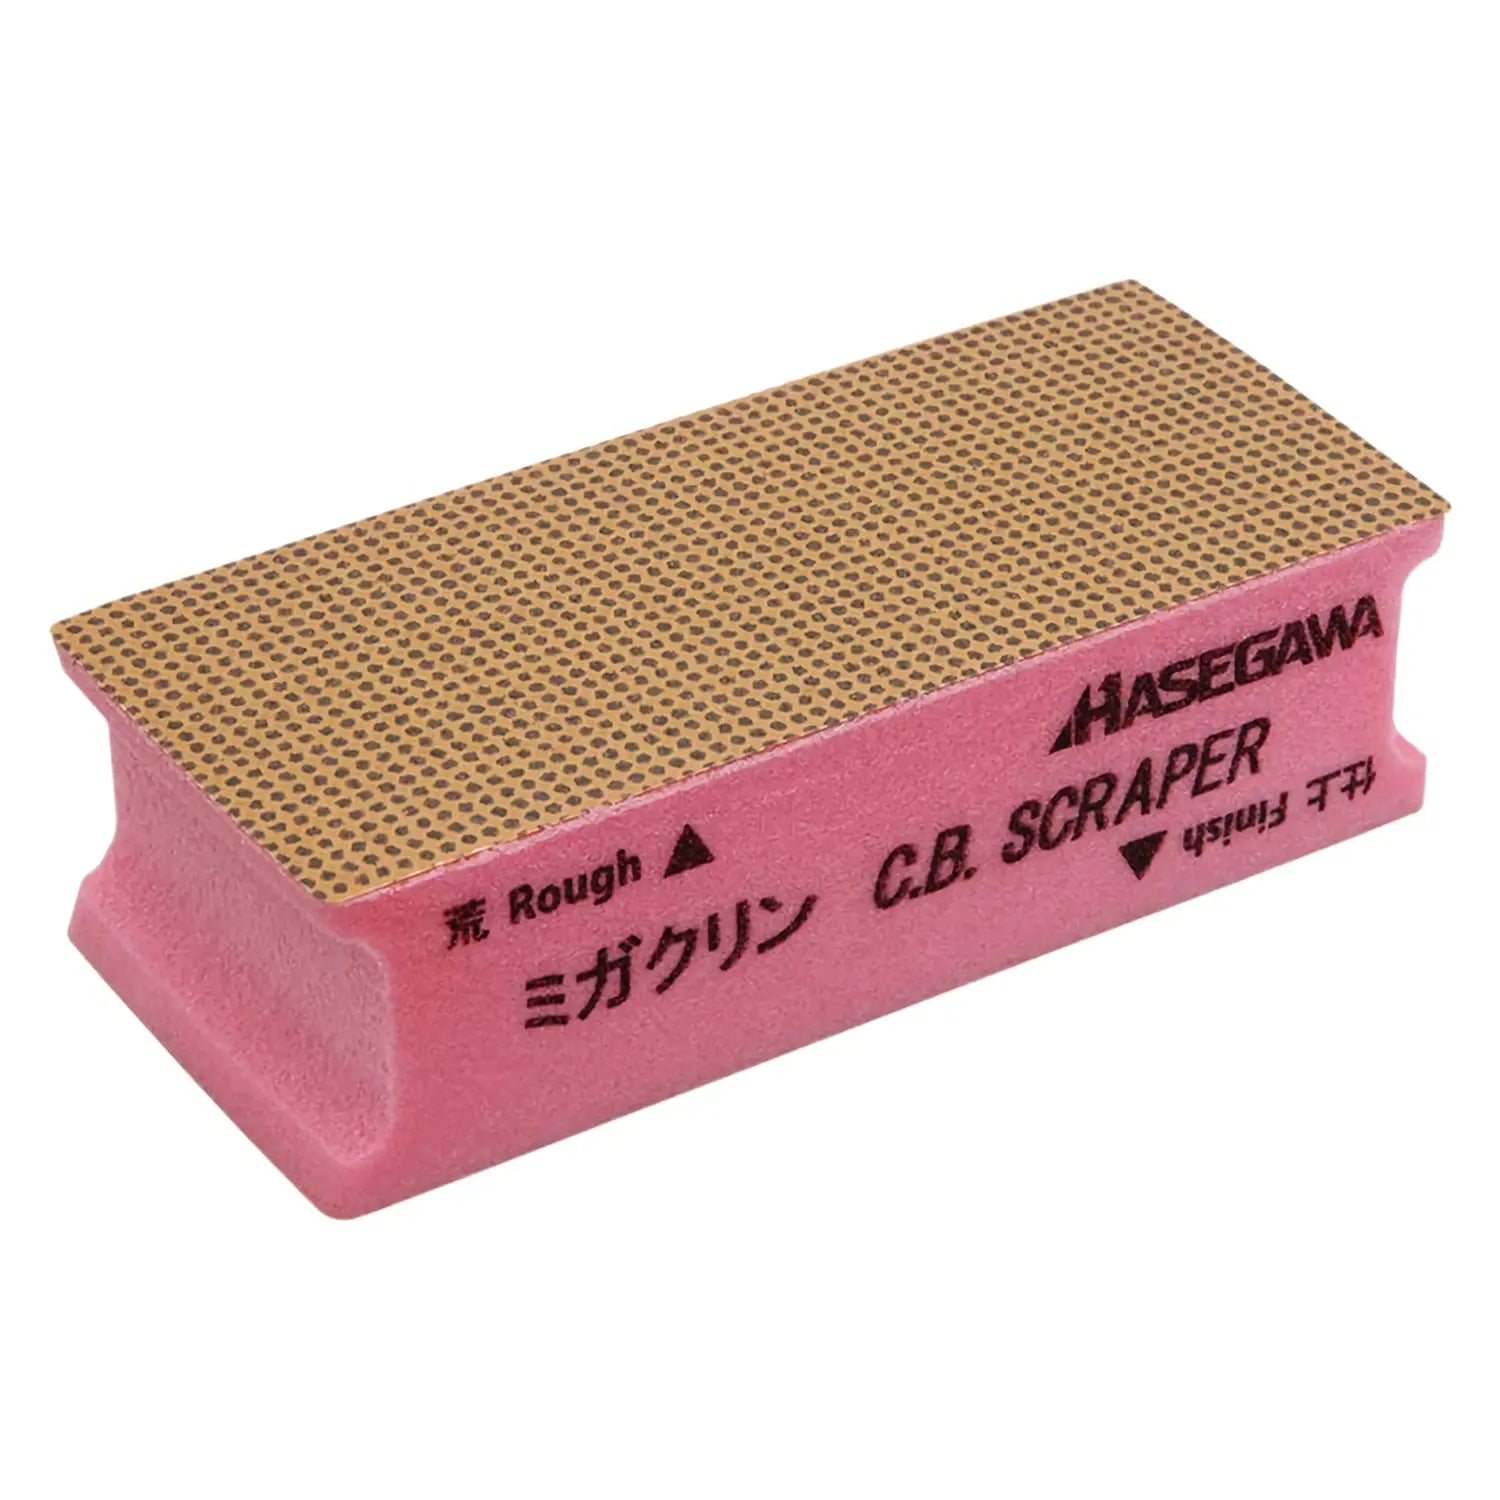 Shinkousha Stainless Steel Bench Scraper - Globalkitchen Japan